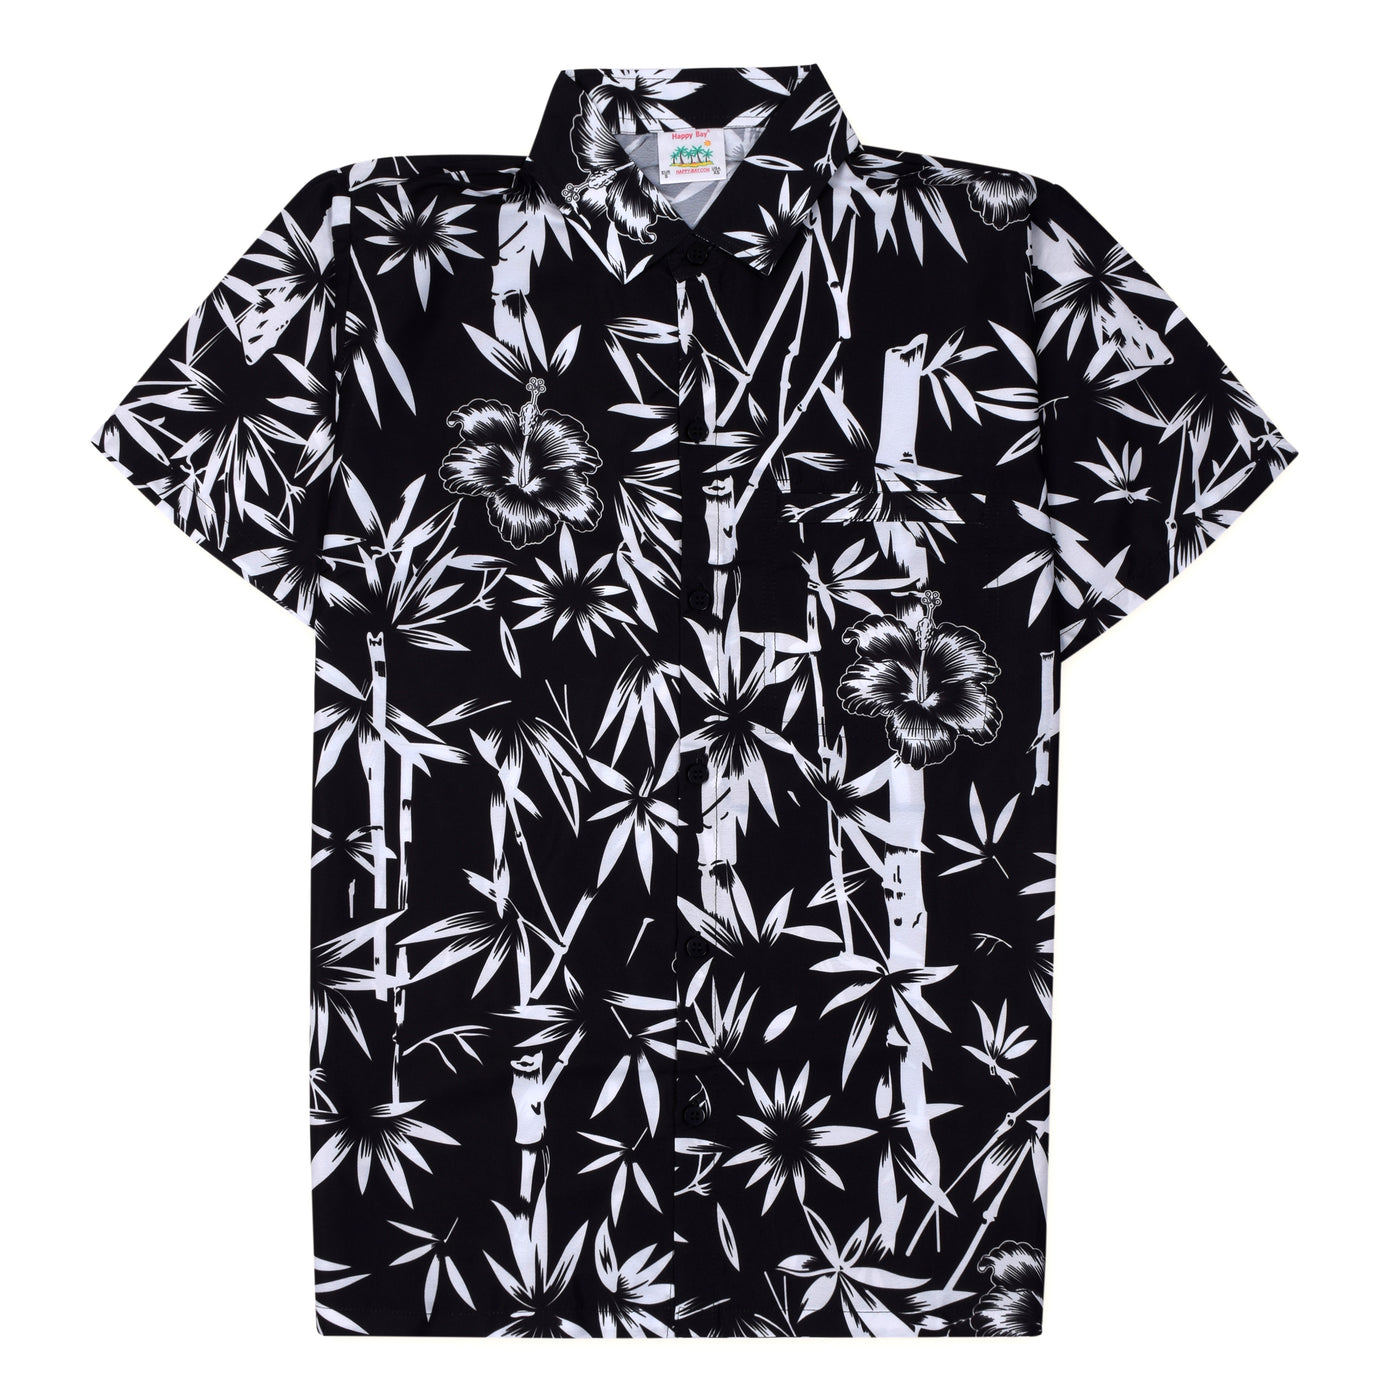 La camisa floral de bambú tropical